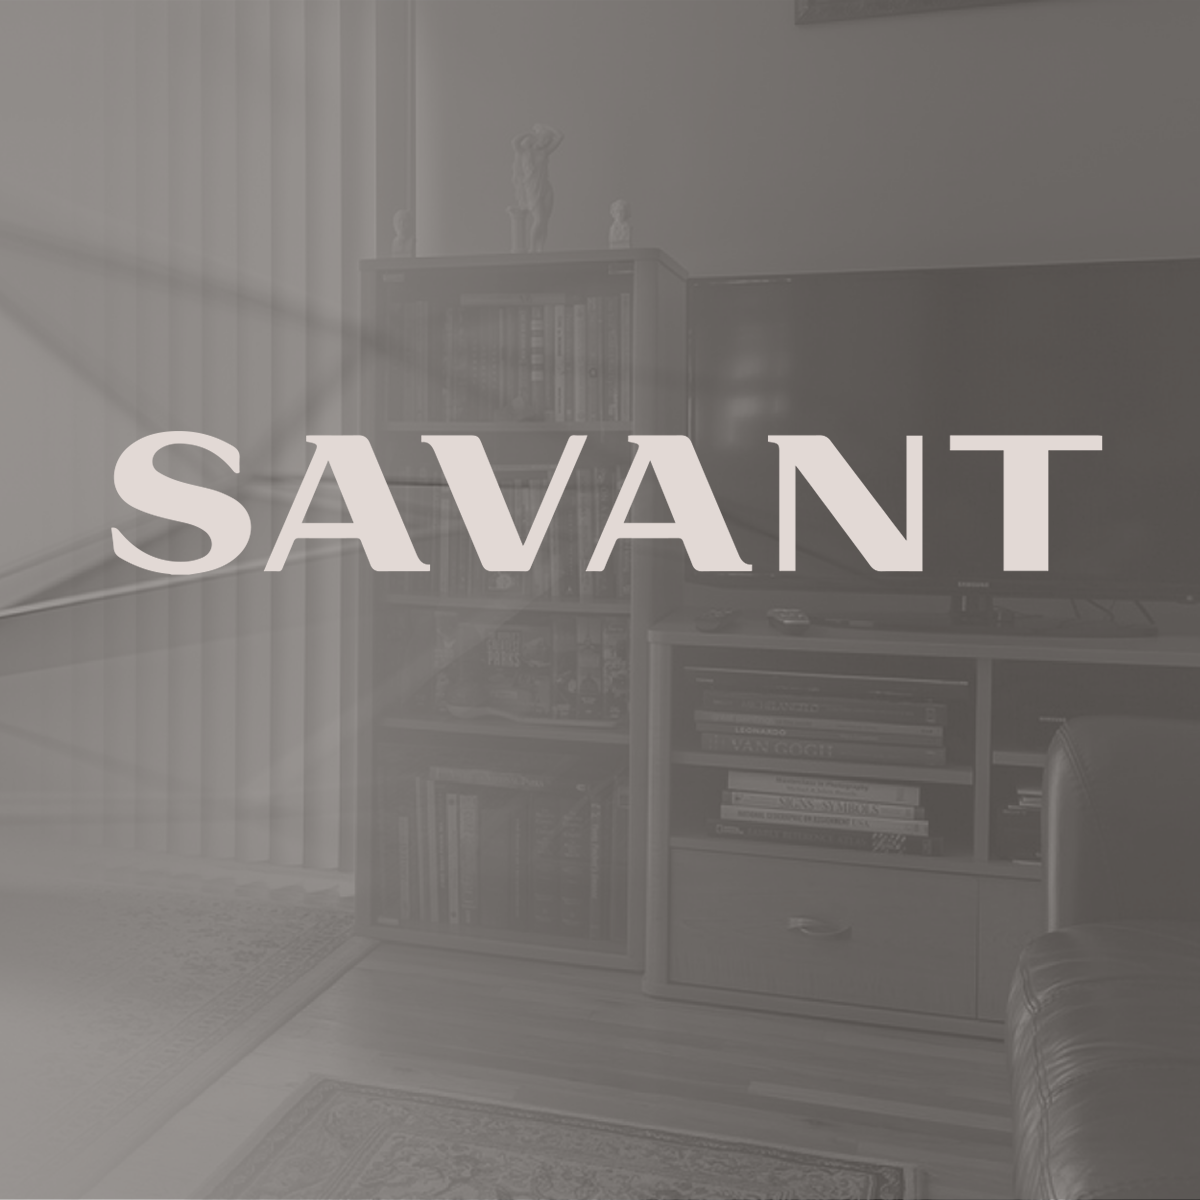 Savant.png